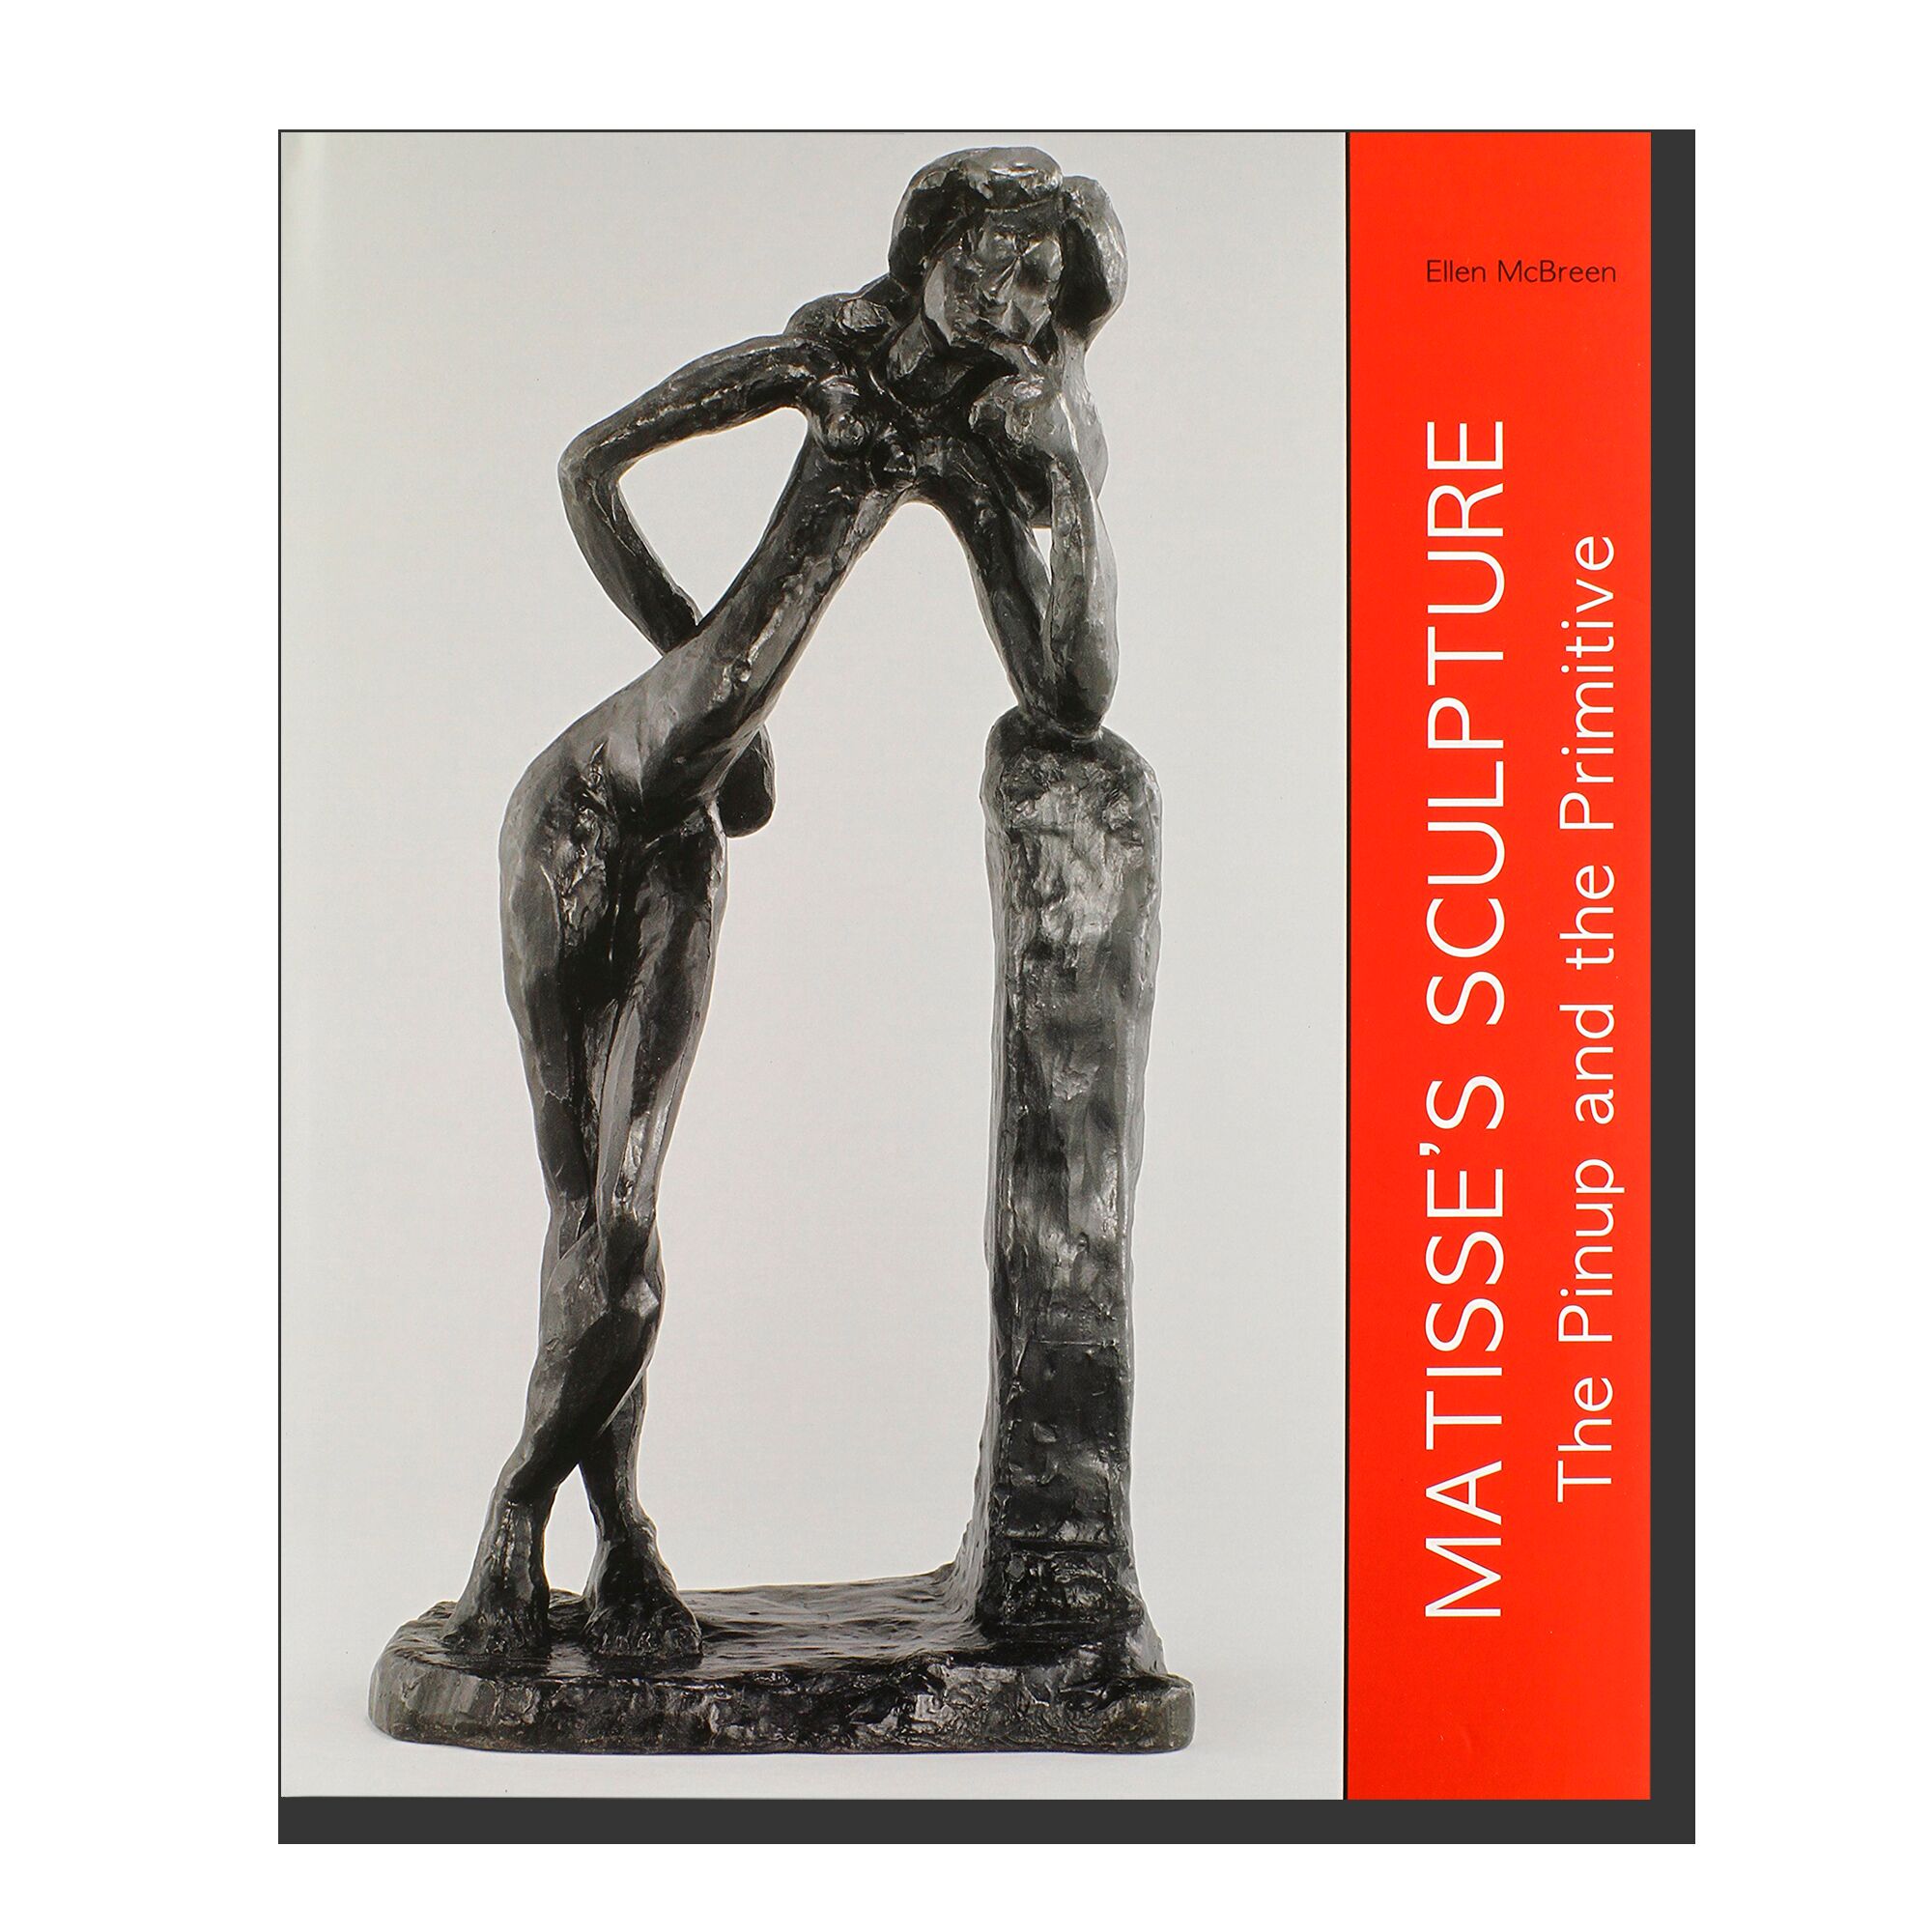 Matisse's Sculpture